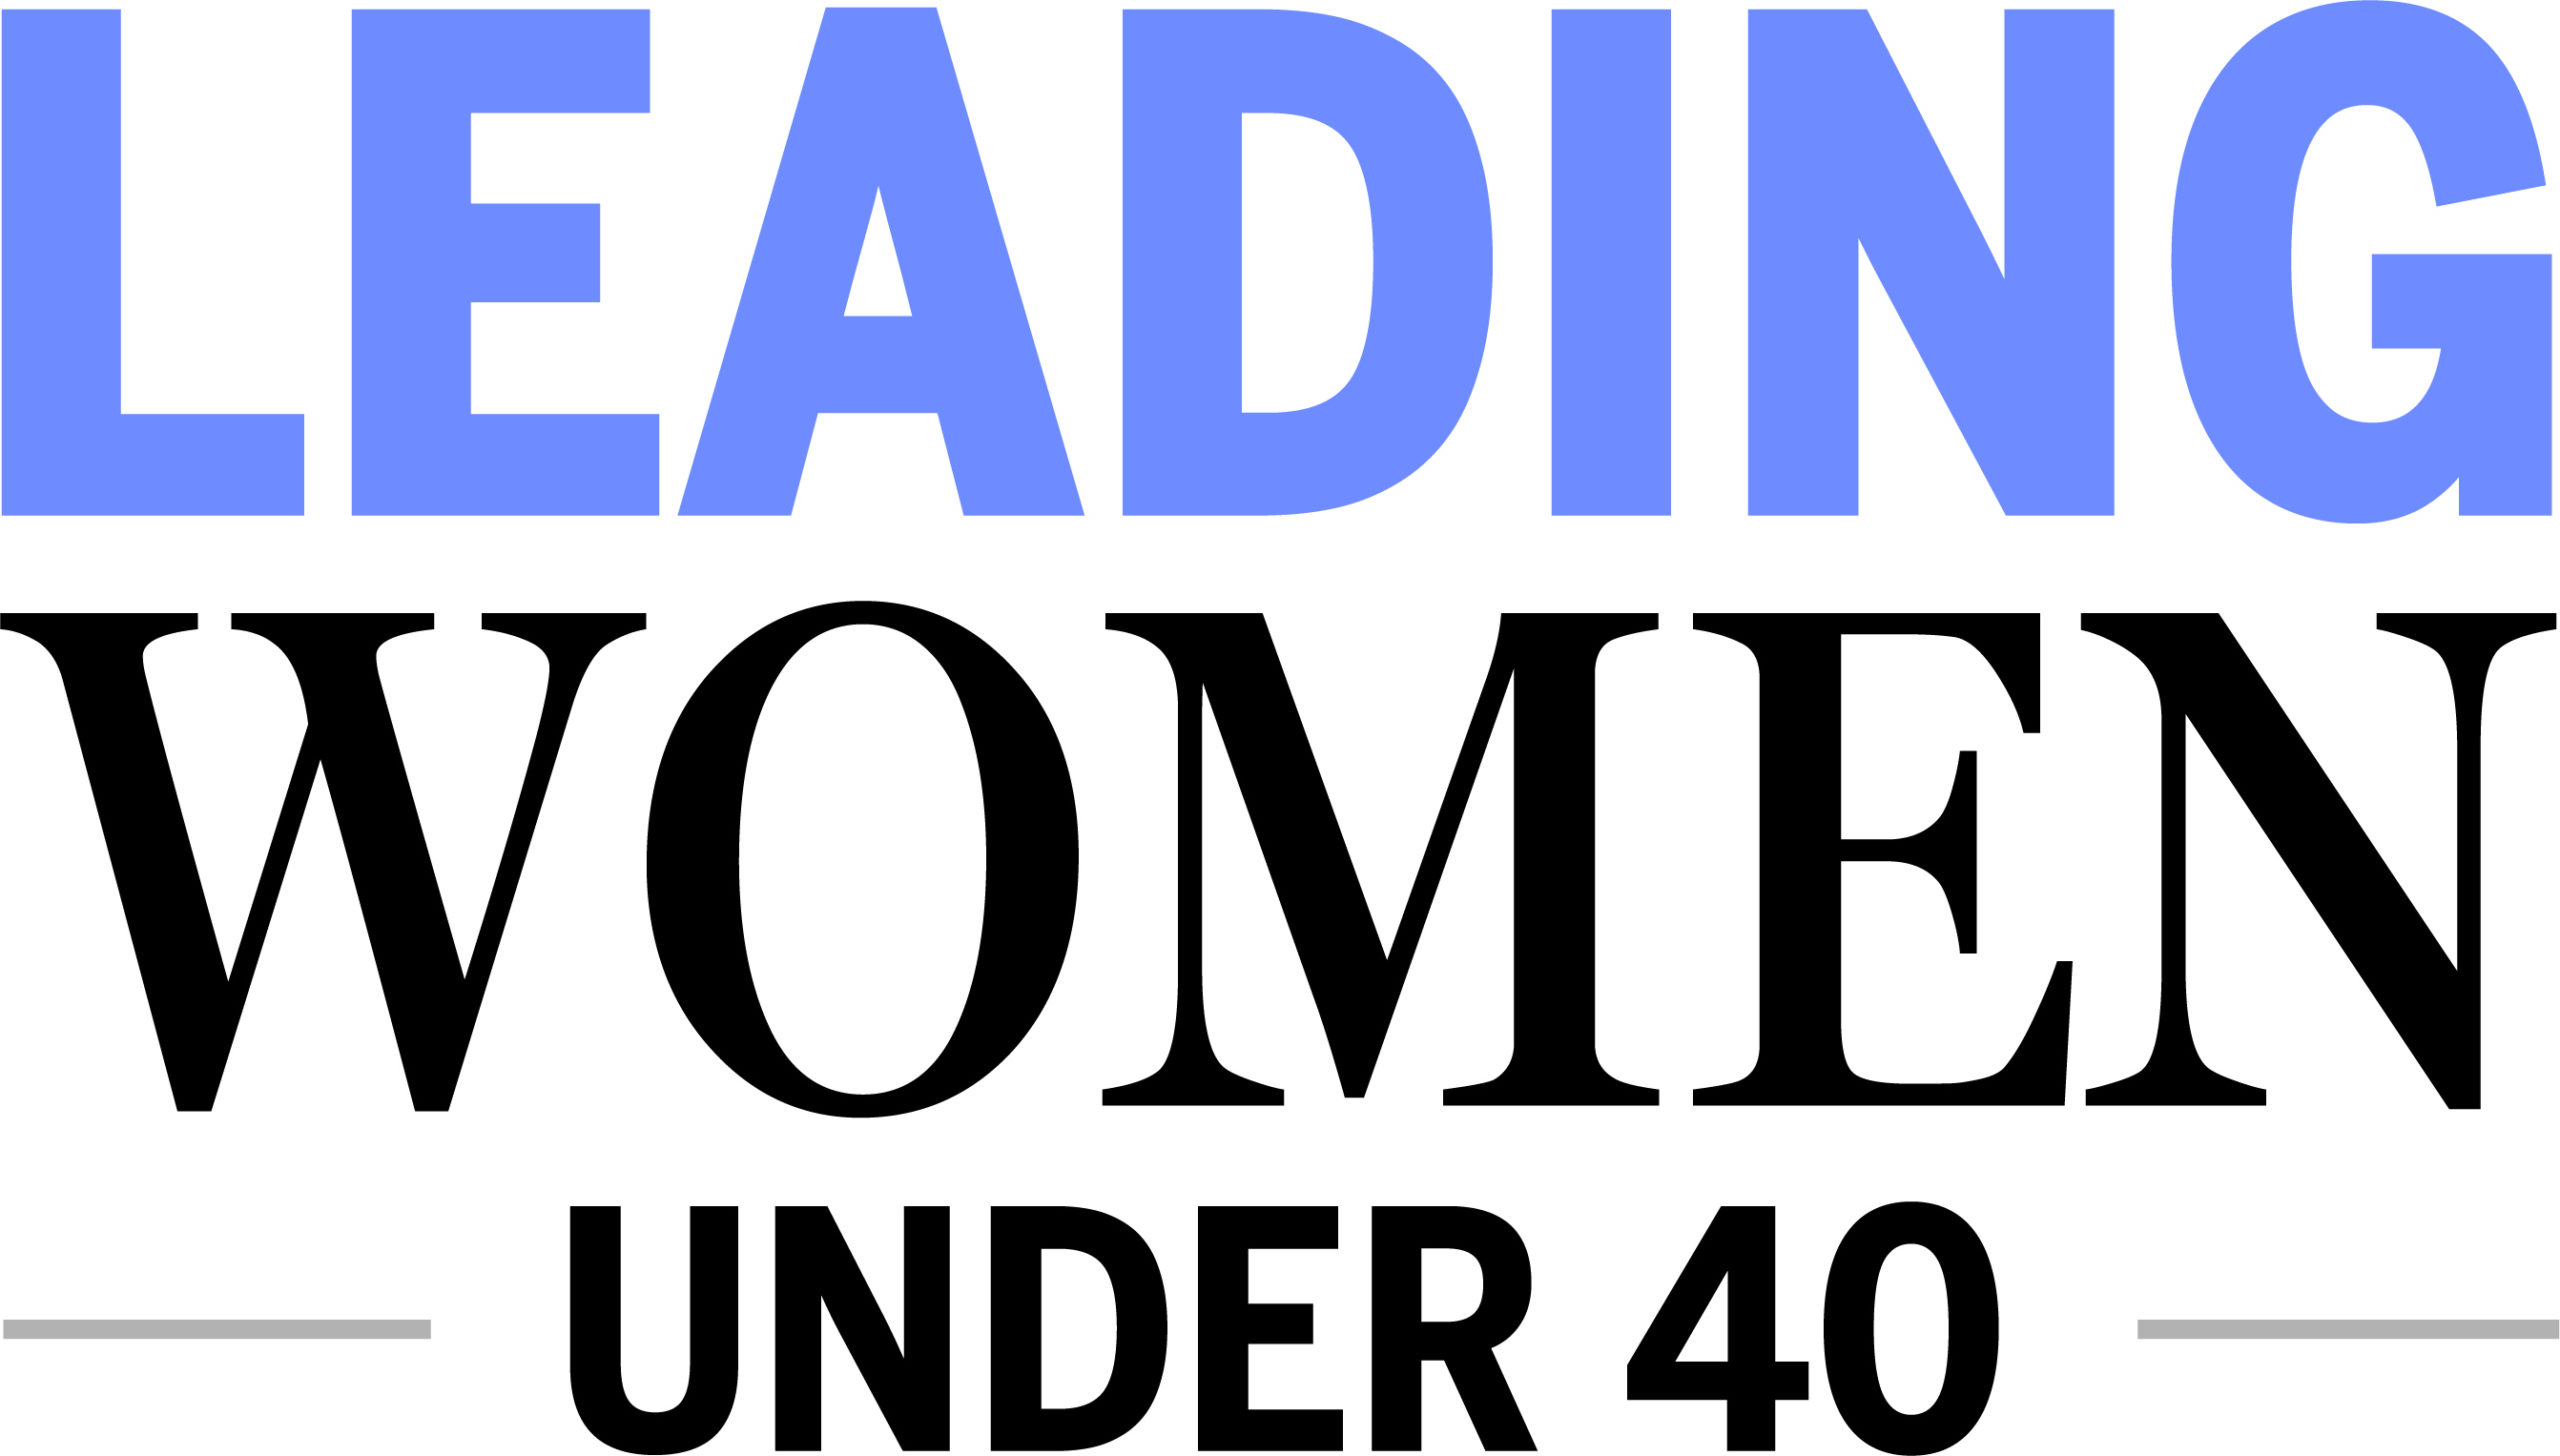 2022-Leading-Women-Under-40-NO-TDR-scaled